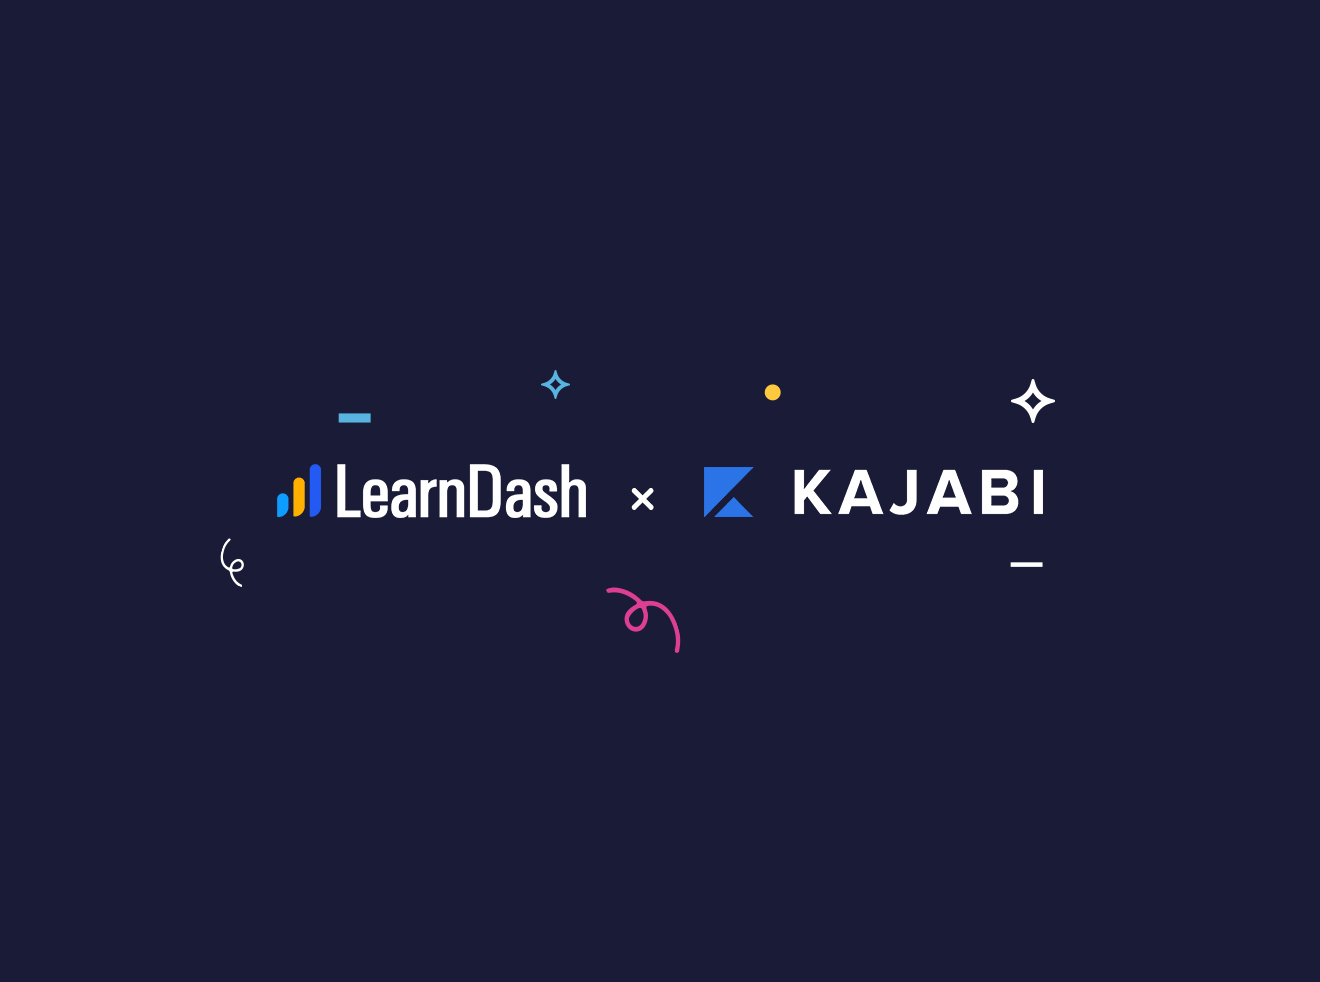 Blog post: LearnDash vs Kajabi compared